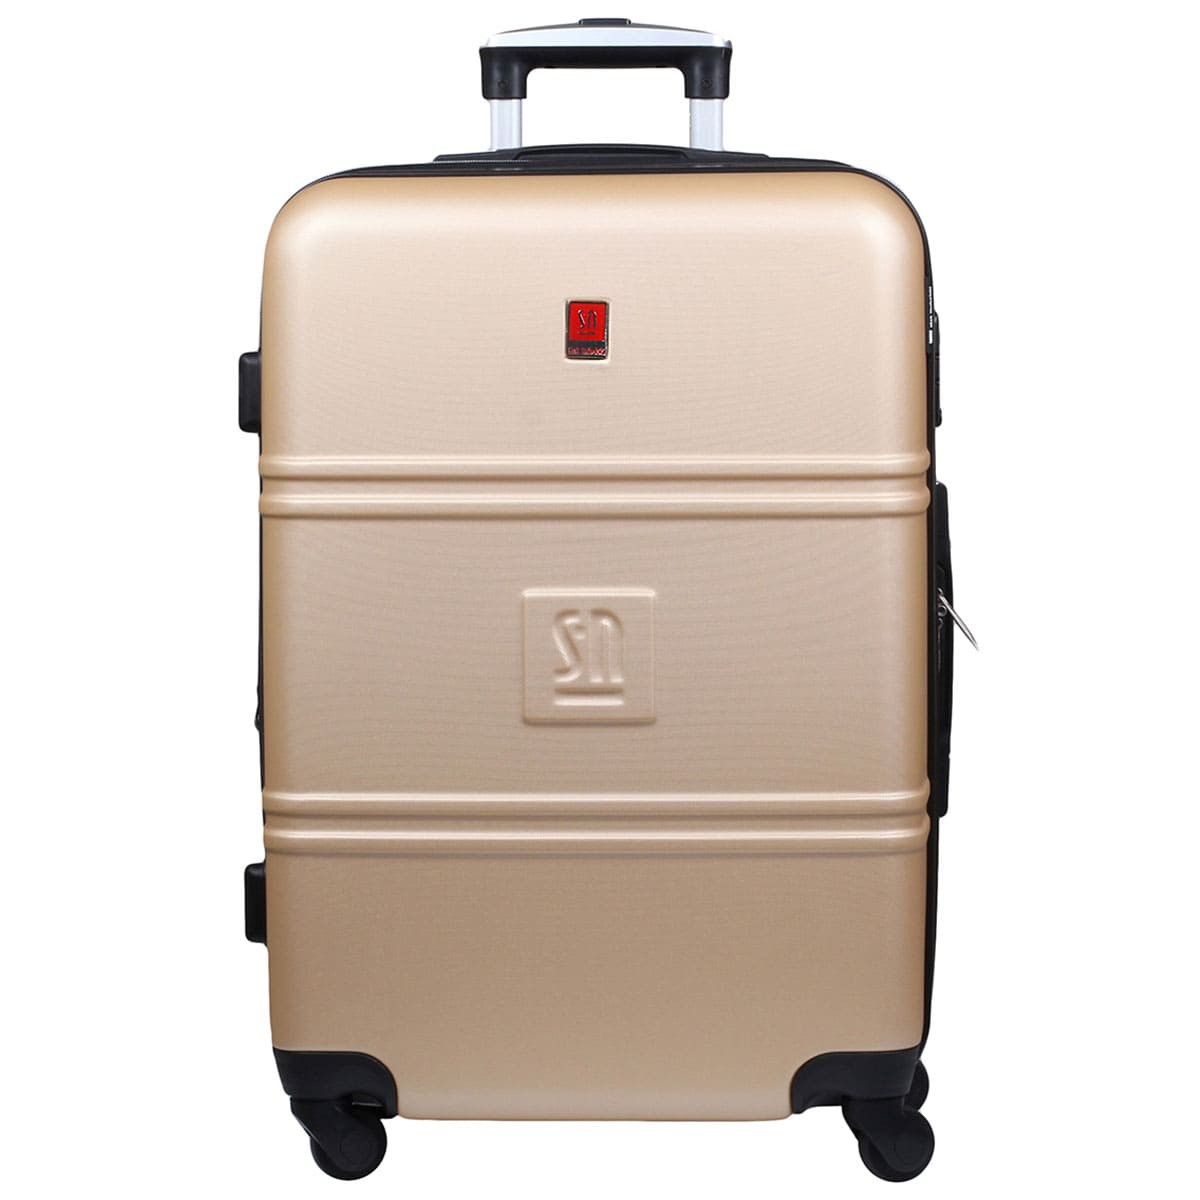 zlota-walizka-podrozna-duza-na-kolkach-Art-Class-04-0411S-25.jpg